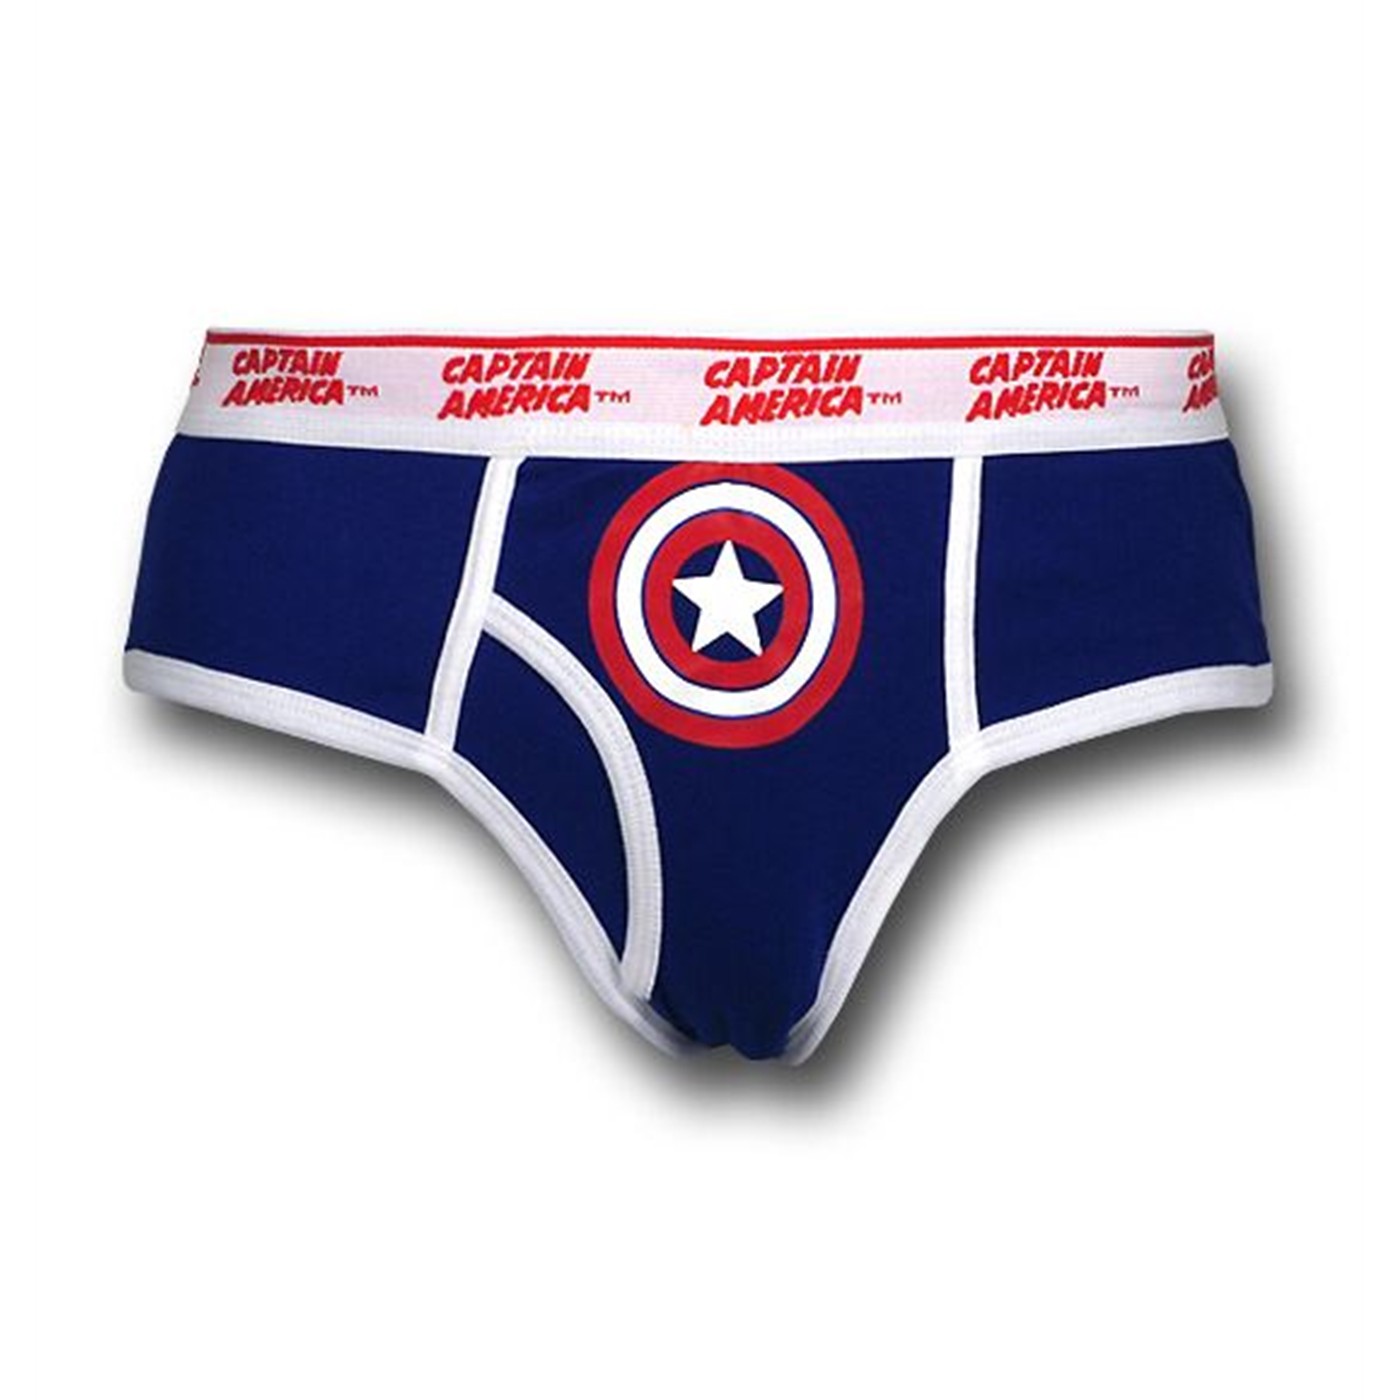 captain america underpants